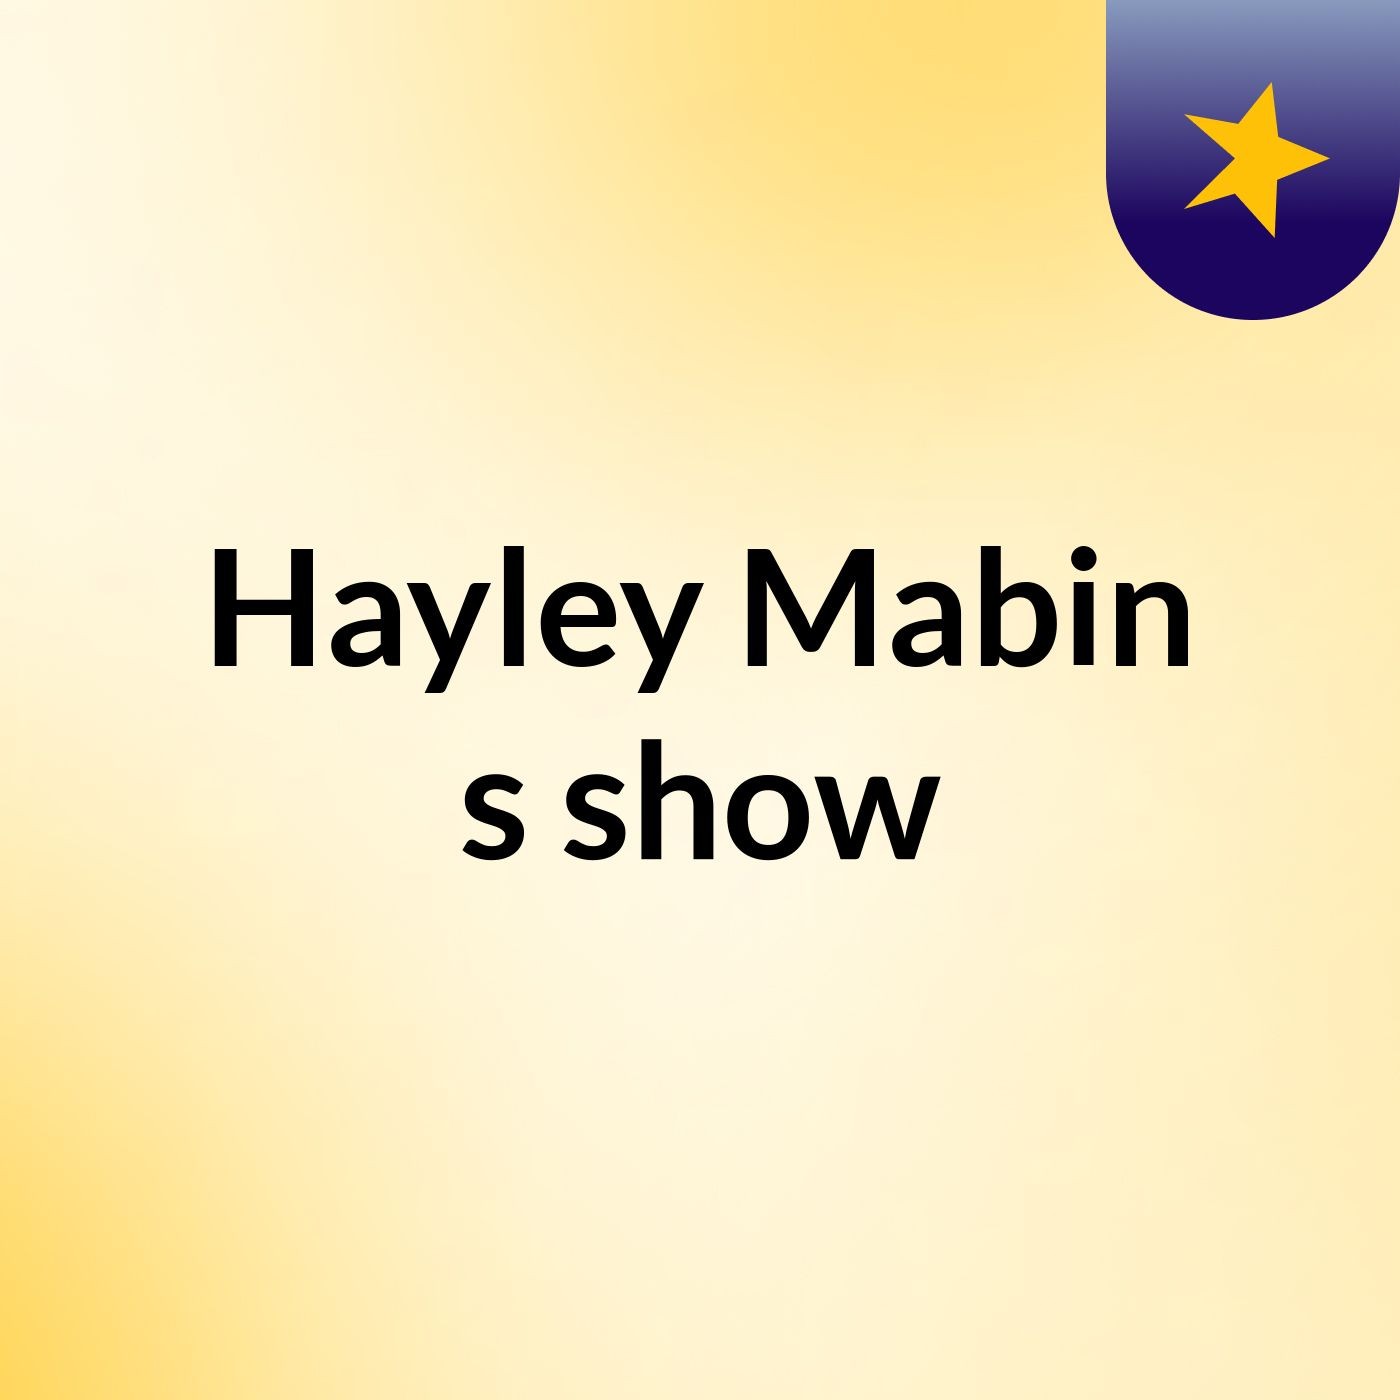 Hayley Mabin's show